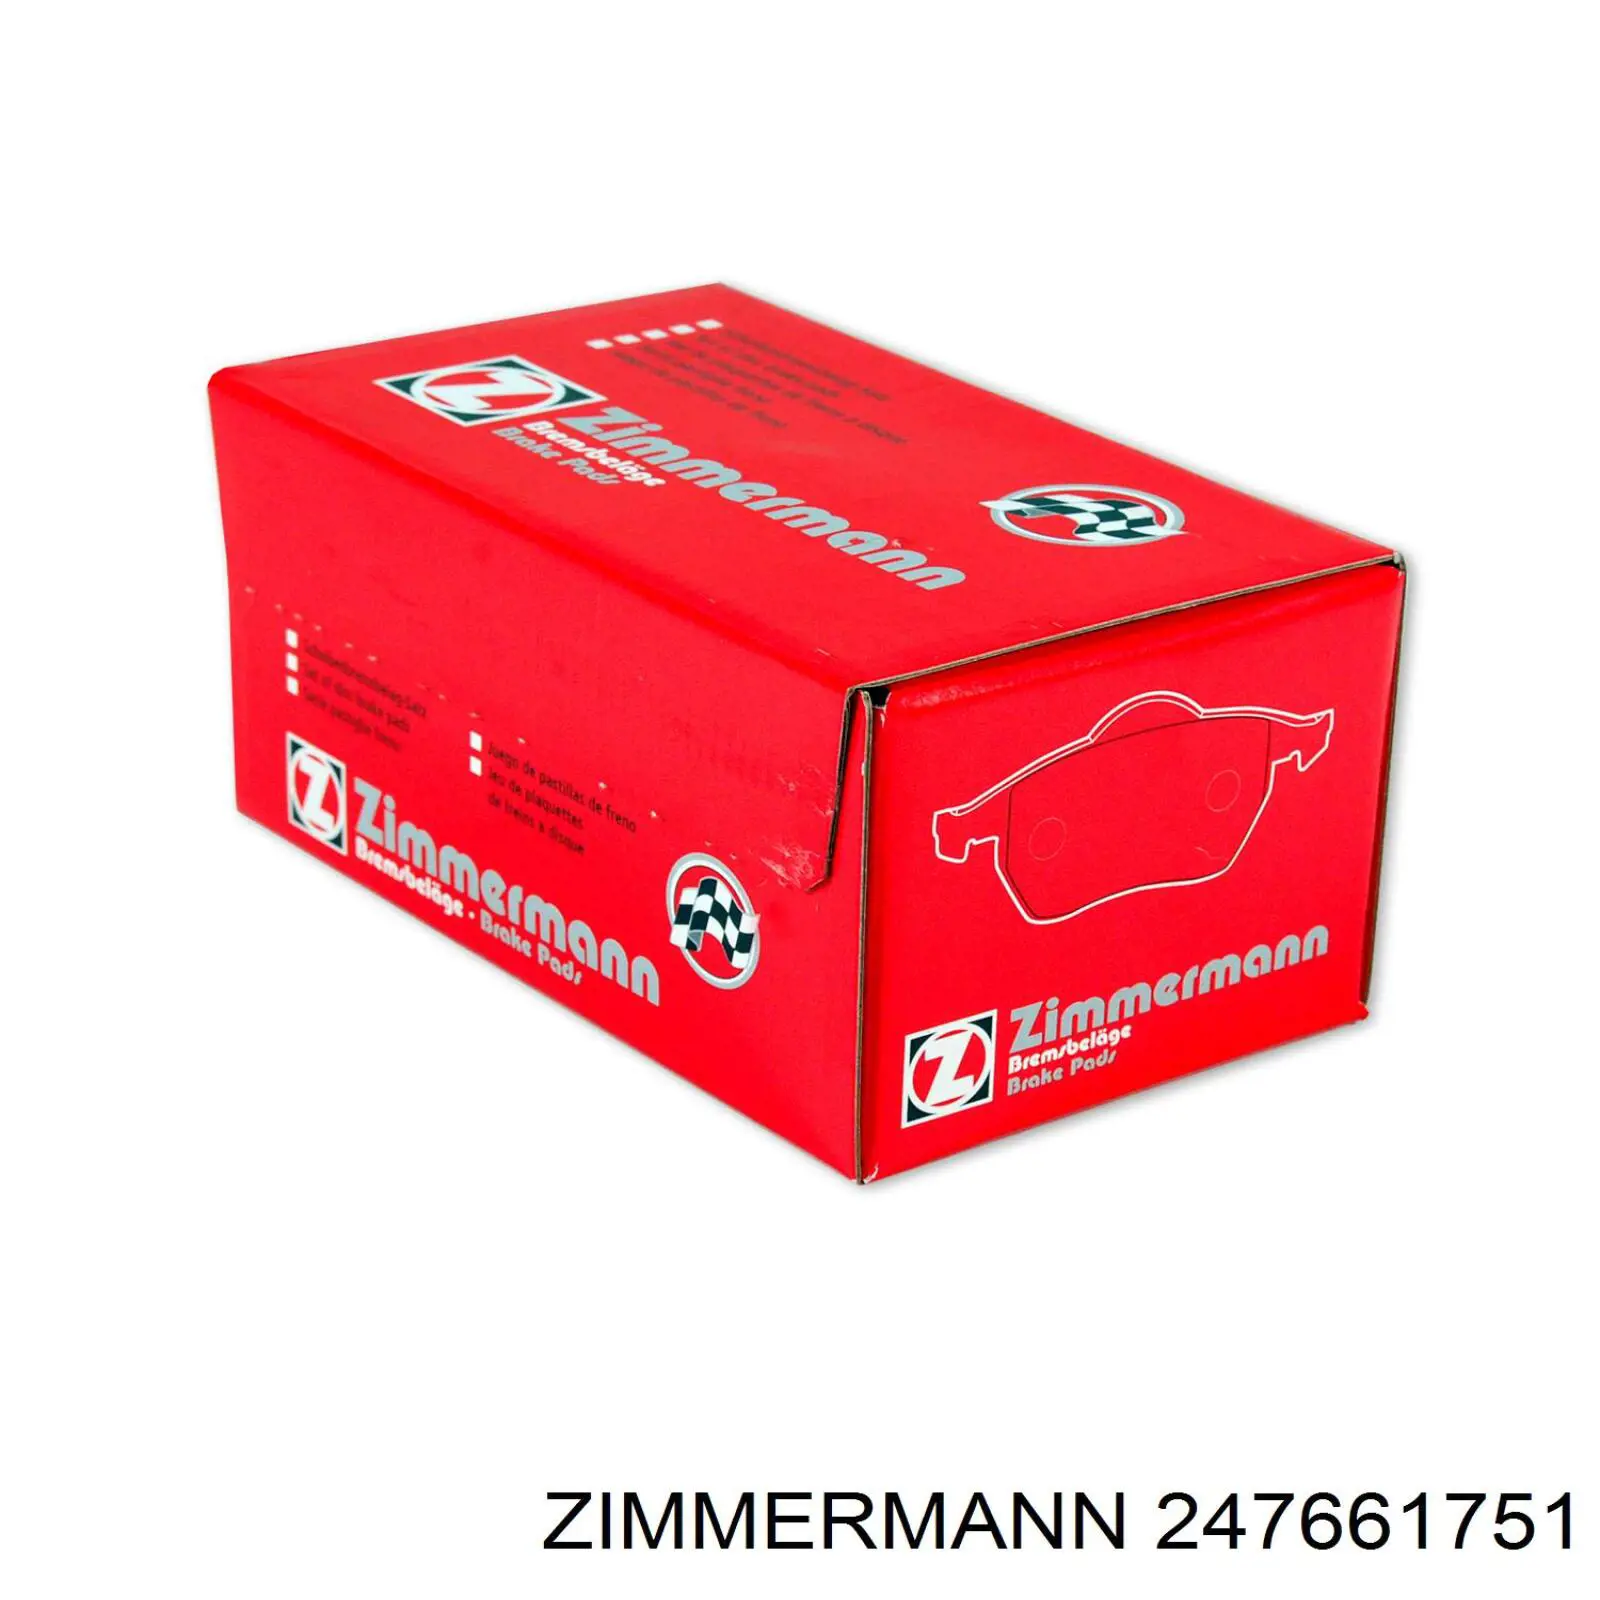 247661751 Zimmermann pastillas de freno delanteras